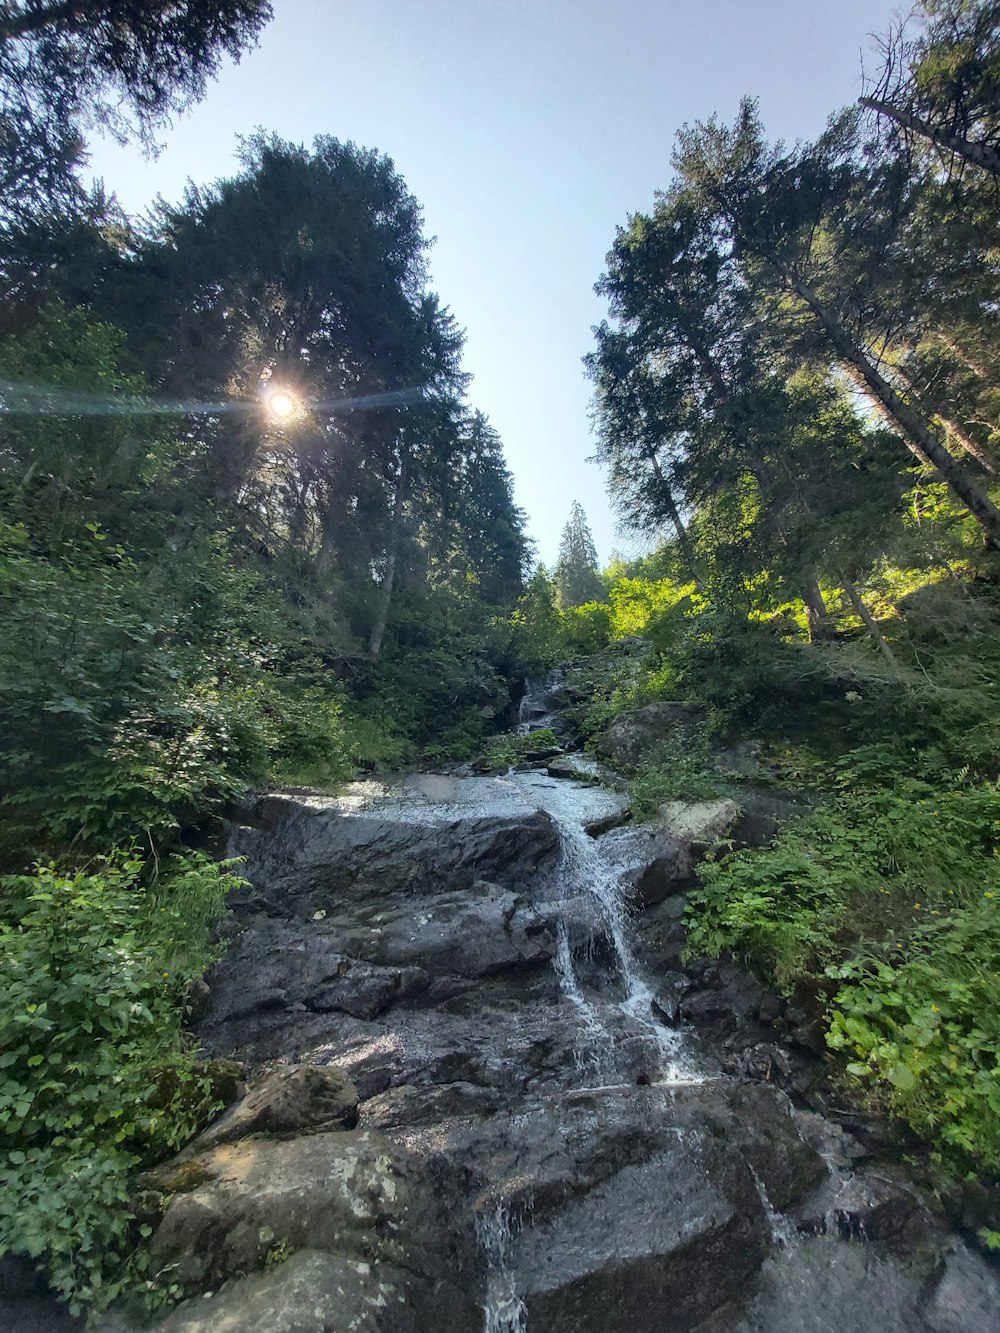 waterfalls between green trees under blue sky during daytime